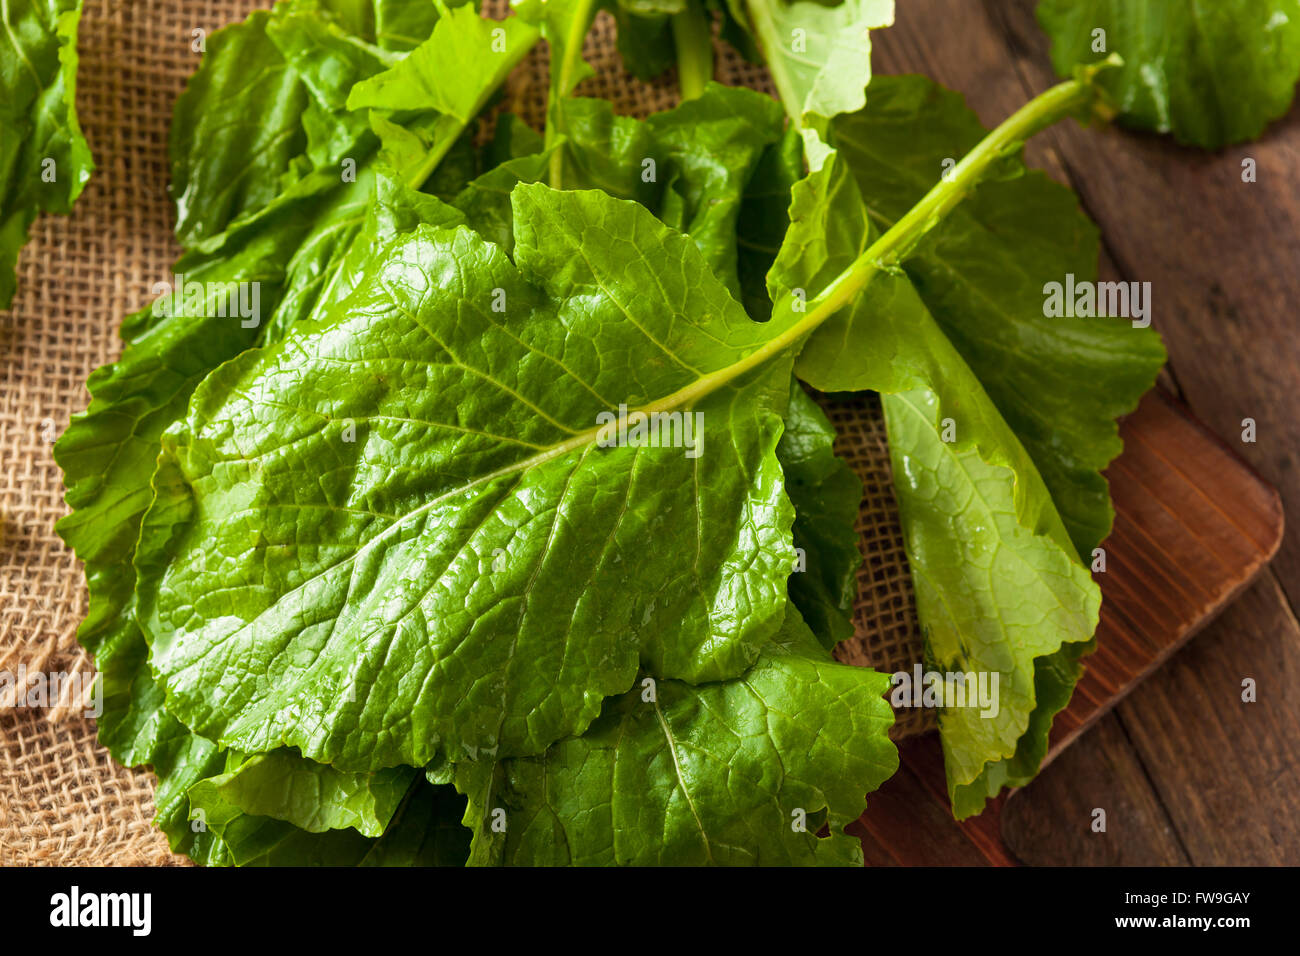 Raw Organic Turnip Greens Ready to Eat Stock Photo